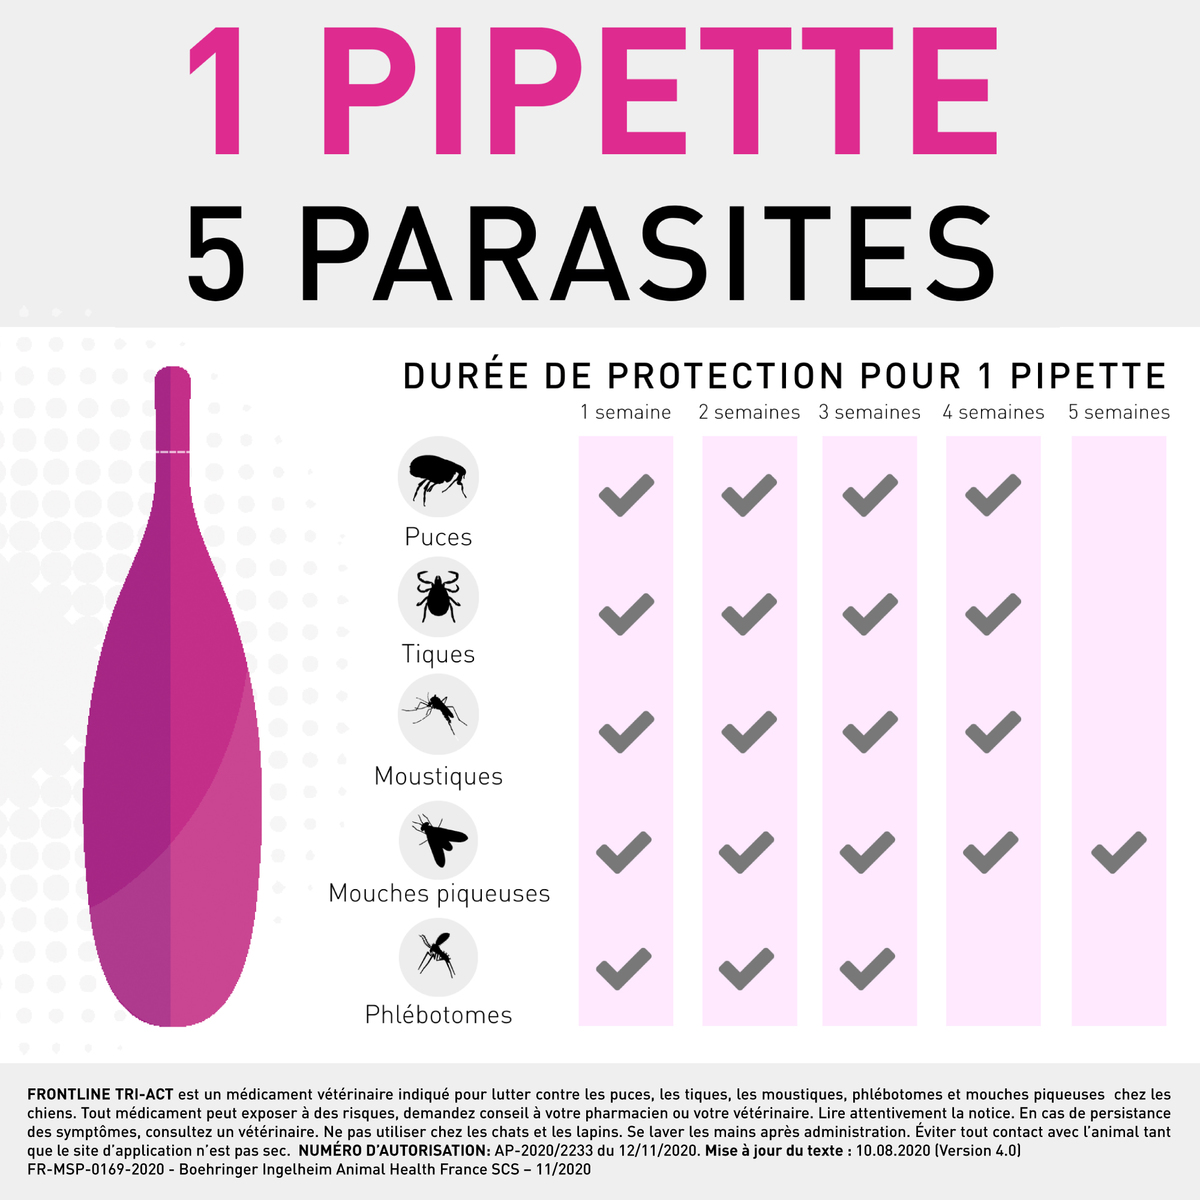 1 pipette = 5 parasites